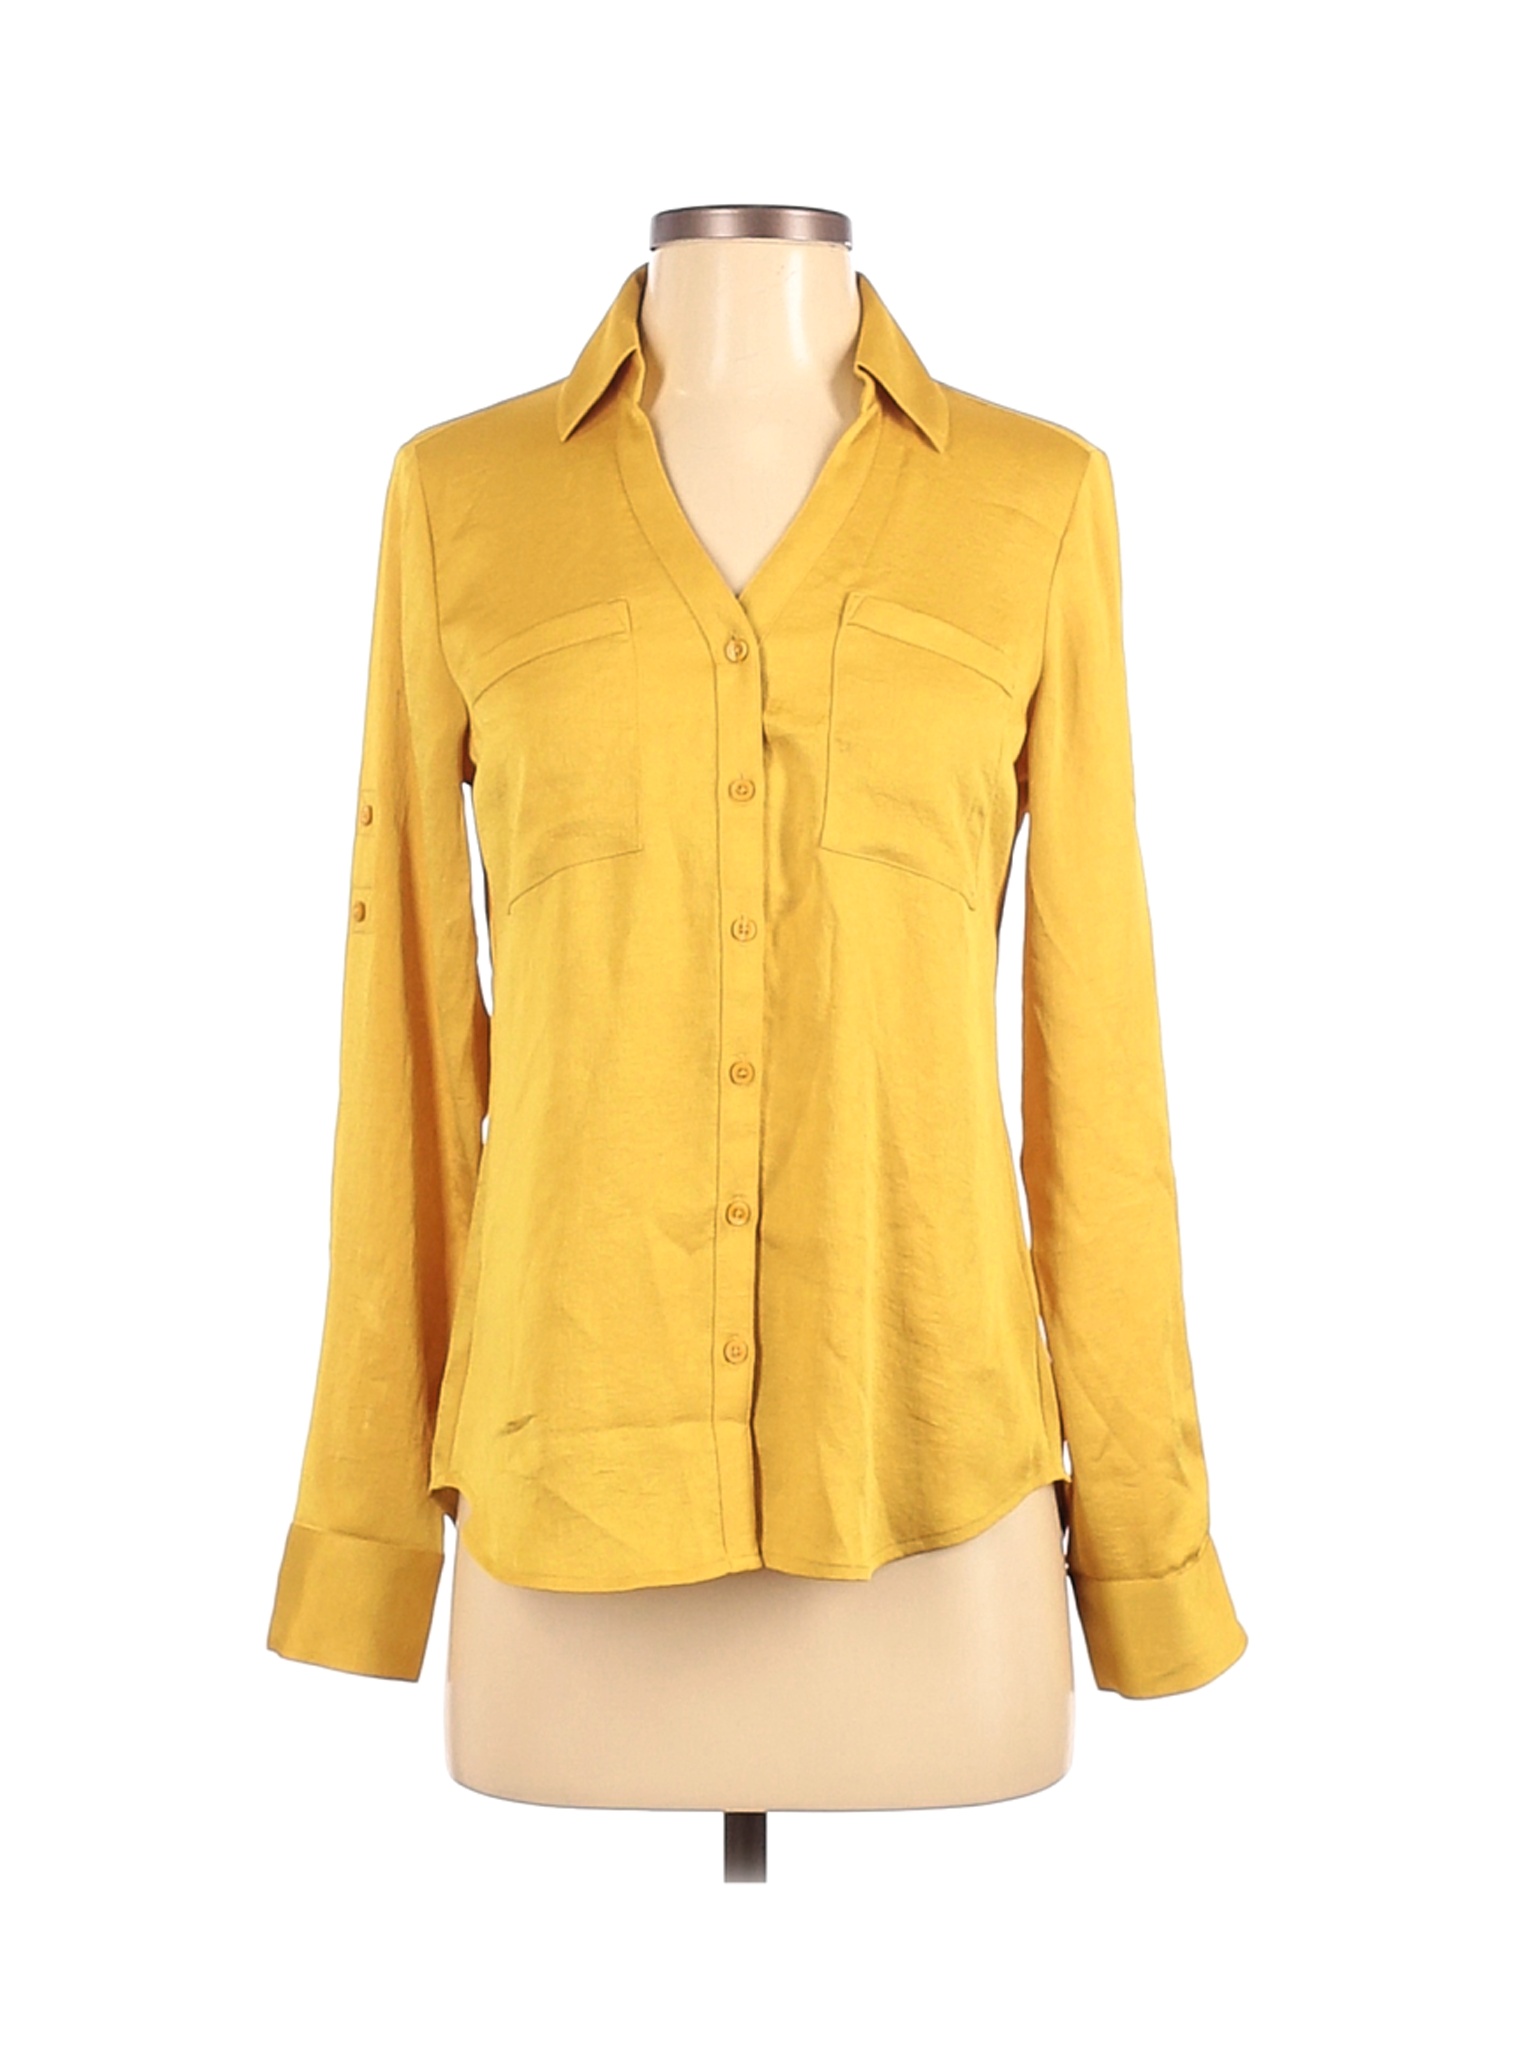 Express Women Yellow Long Sleeve Blouse XS | eBay